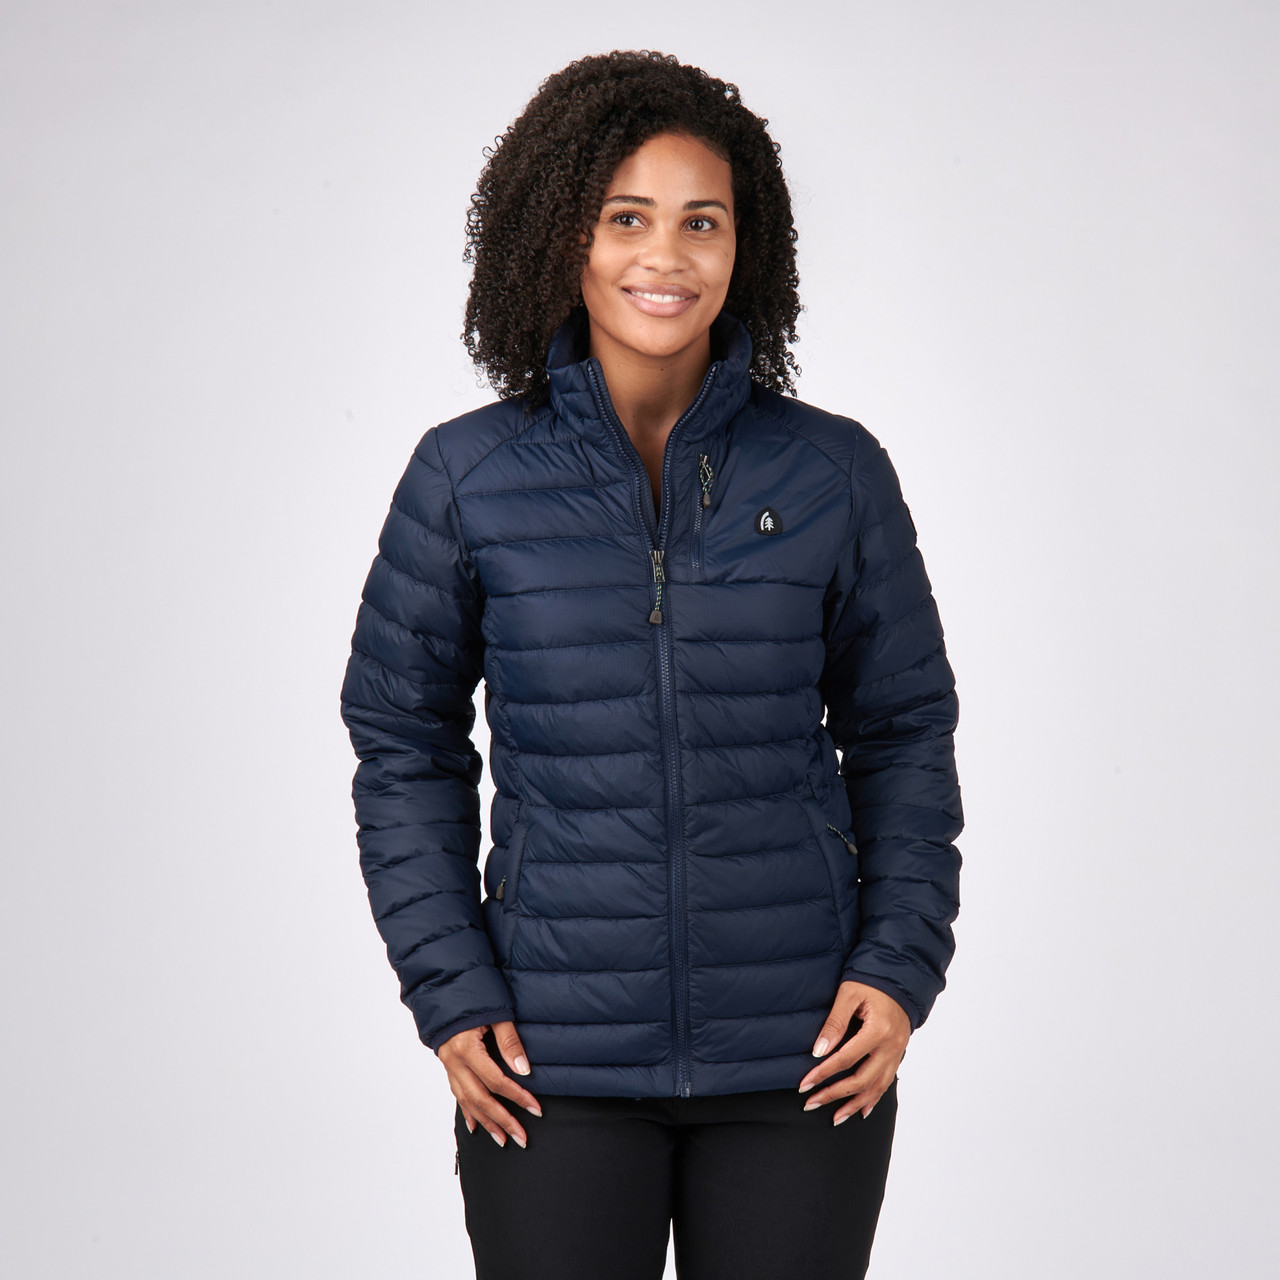 Sierra Designs | Outdoor Clothing & Backpacking Gear